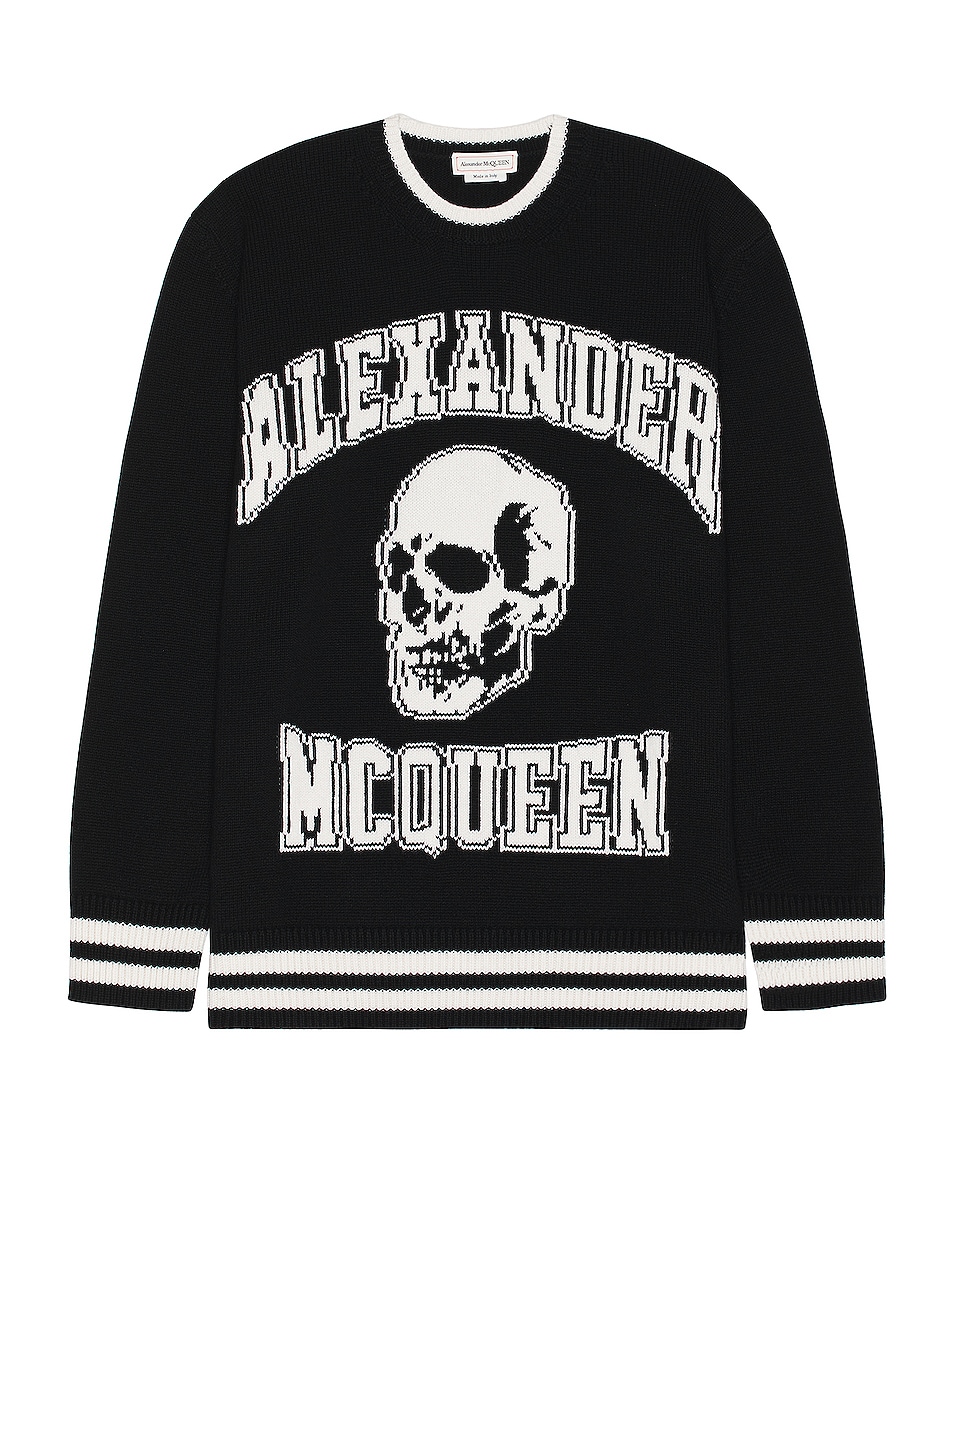 Alexander McQueen Long Sleeve Crewneck in Black & Ivory | FWRD